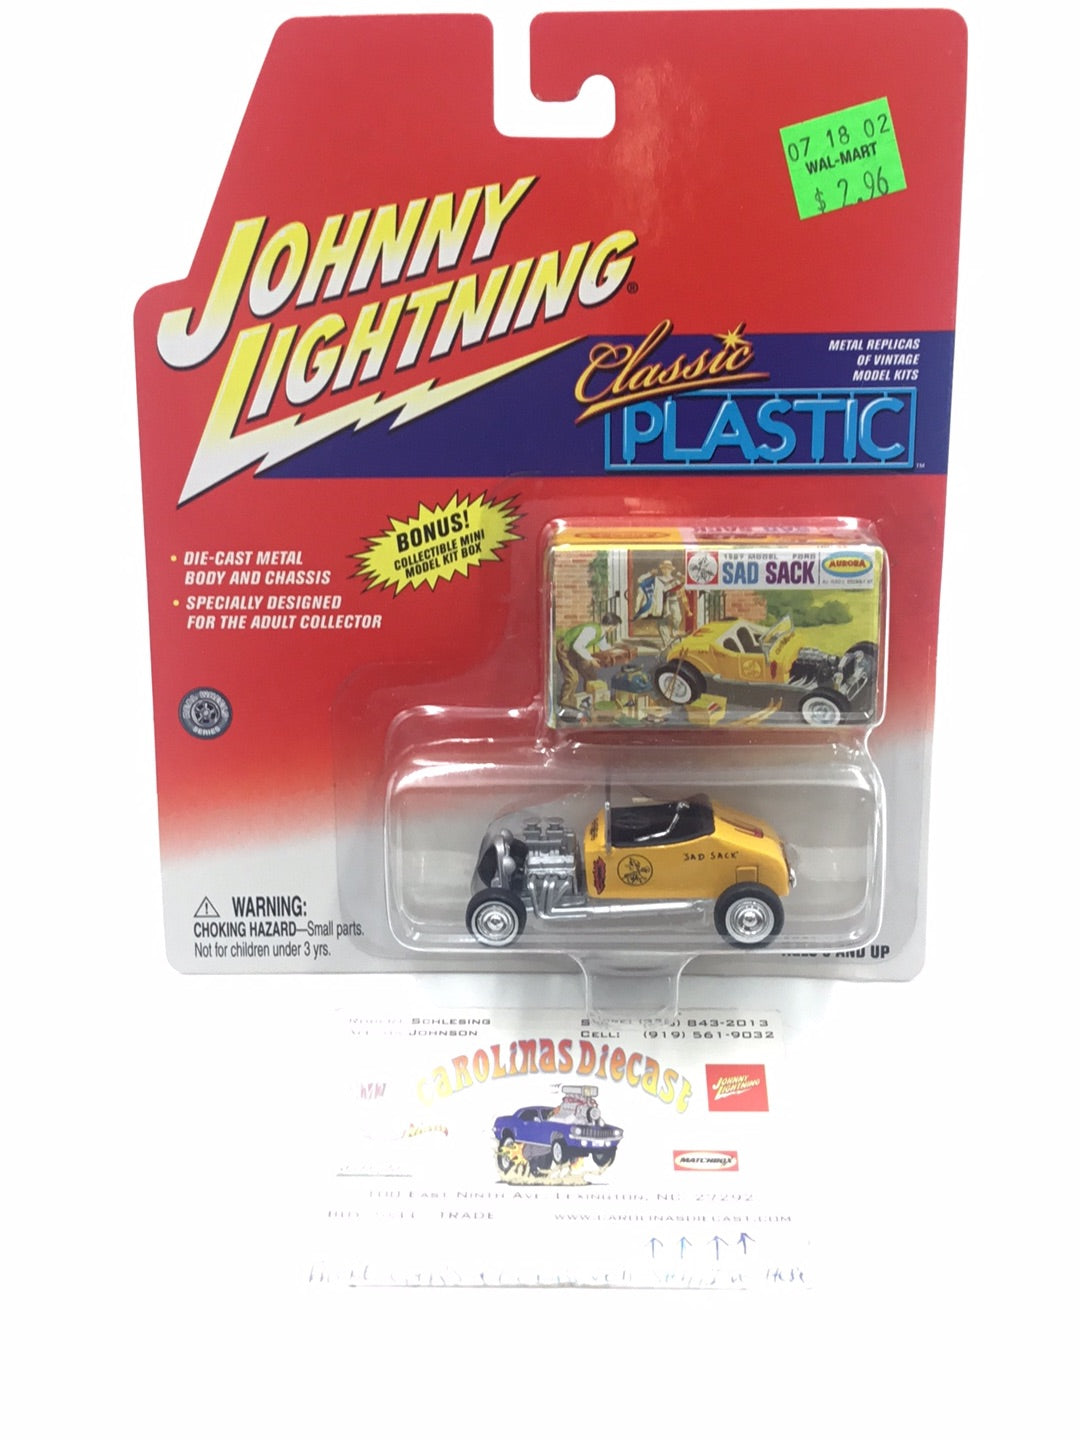 Johnny lightning Classic Plastic Sad Sack 210E